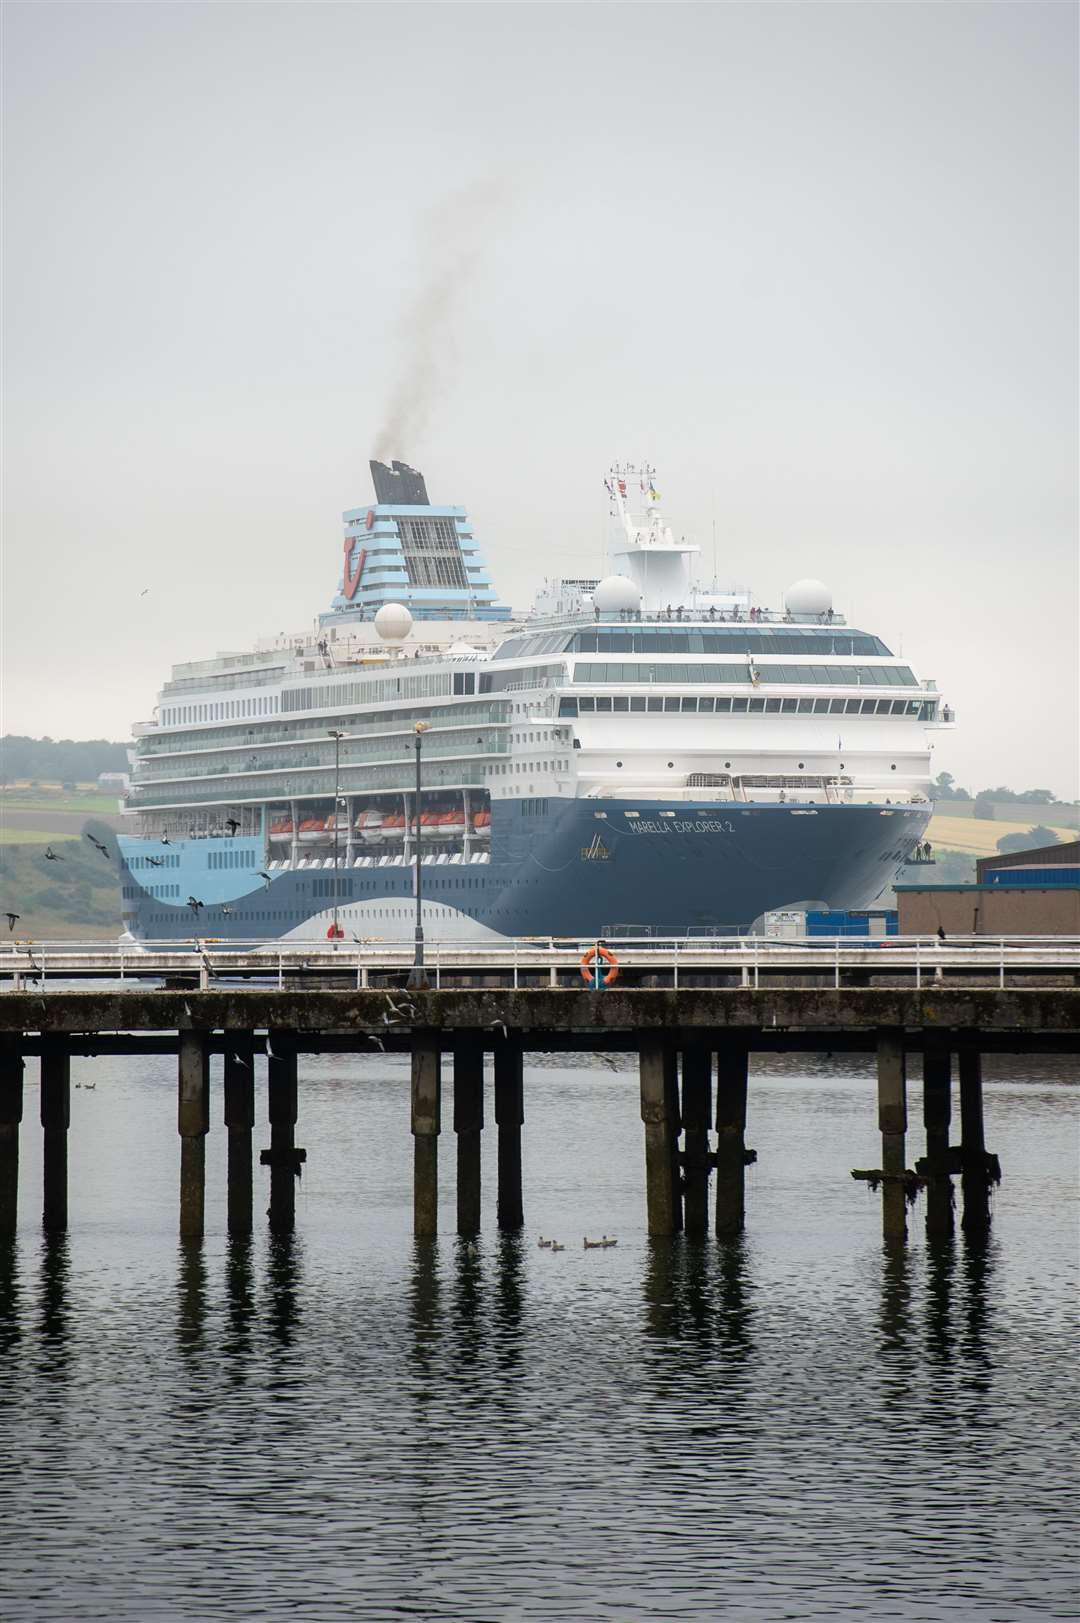 Marella Explorer 2 was the first cruise liner in Invergordon since lockdown..